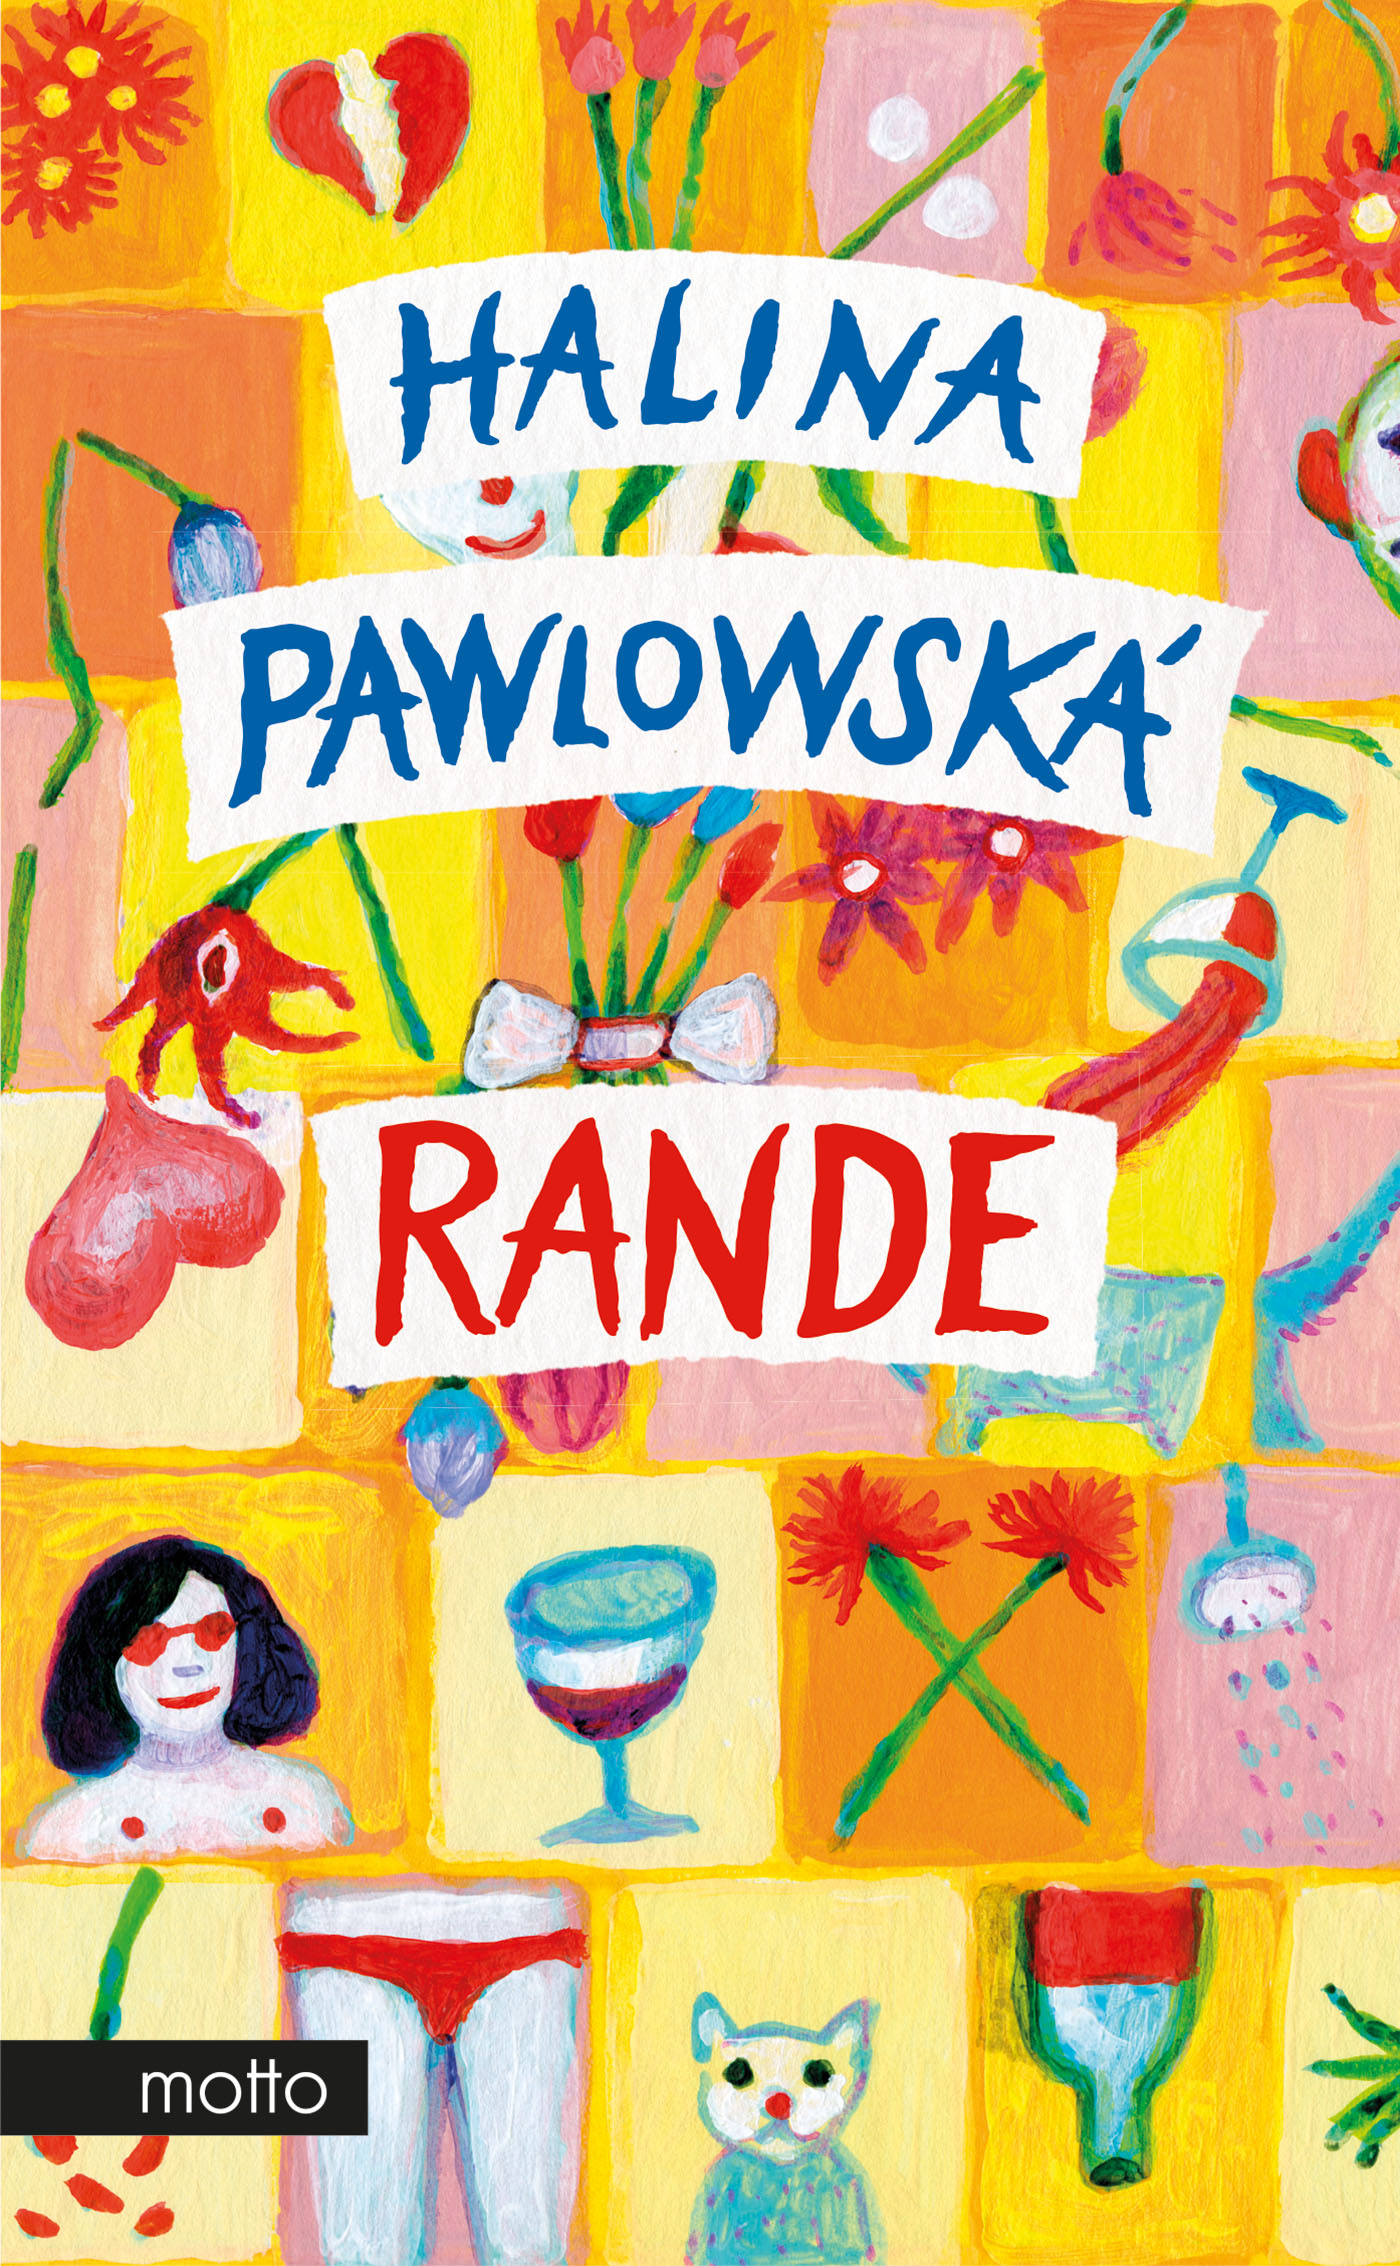 E-kniha Rande - Halina Pawlowská